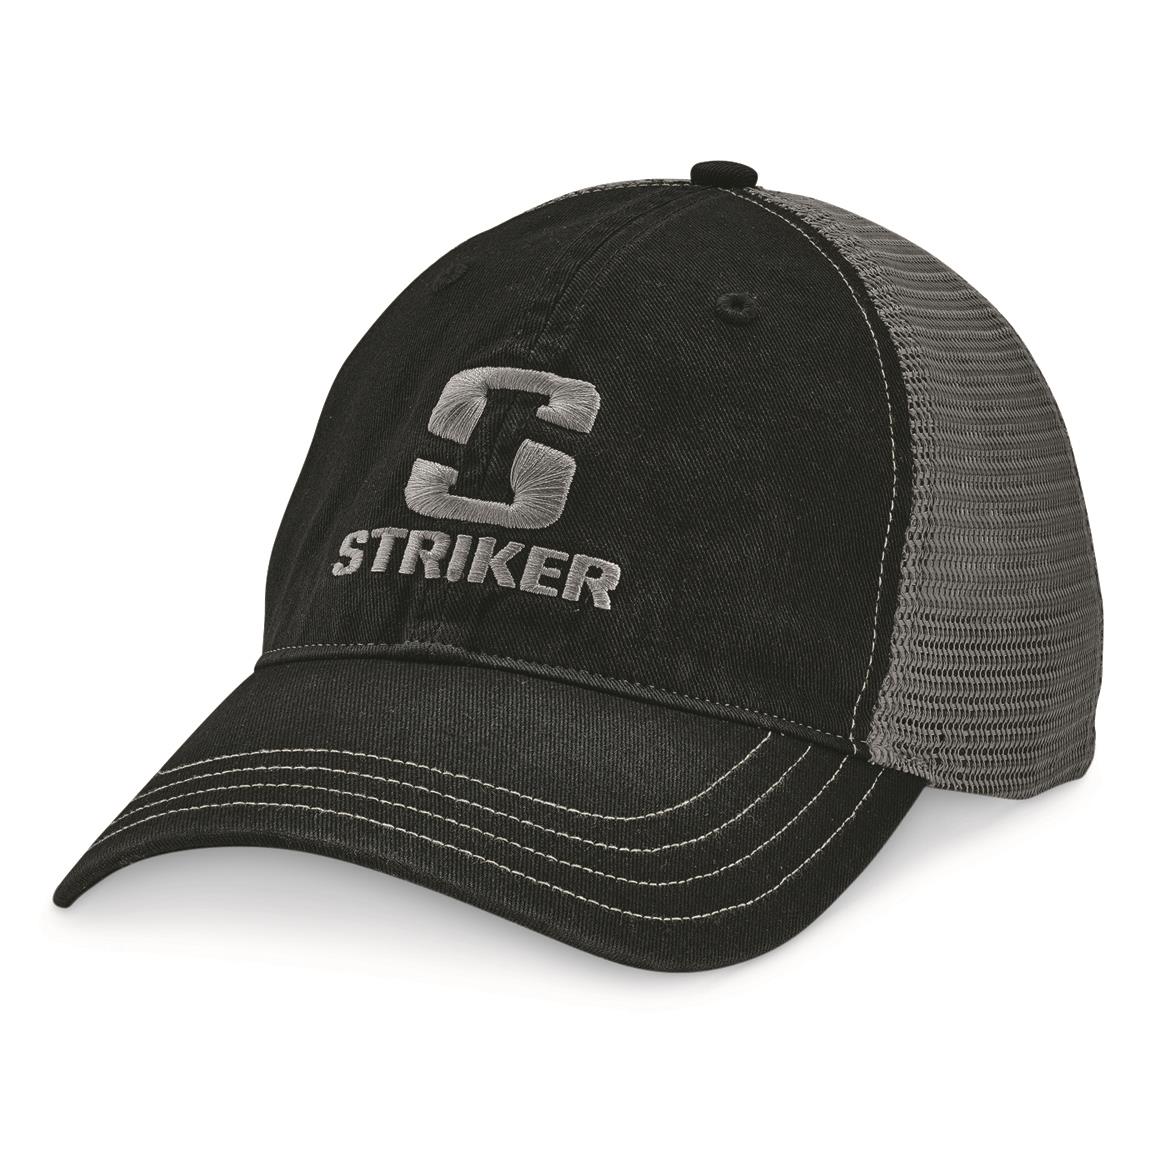 Striker Guide Trucker Cap, Black